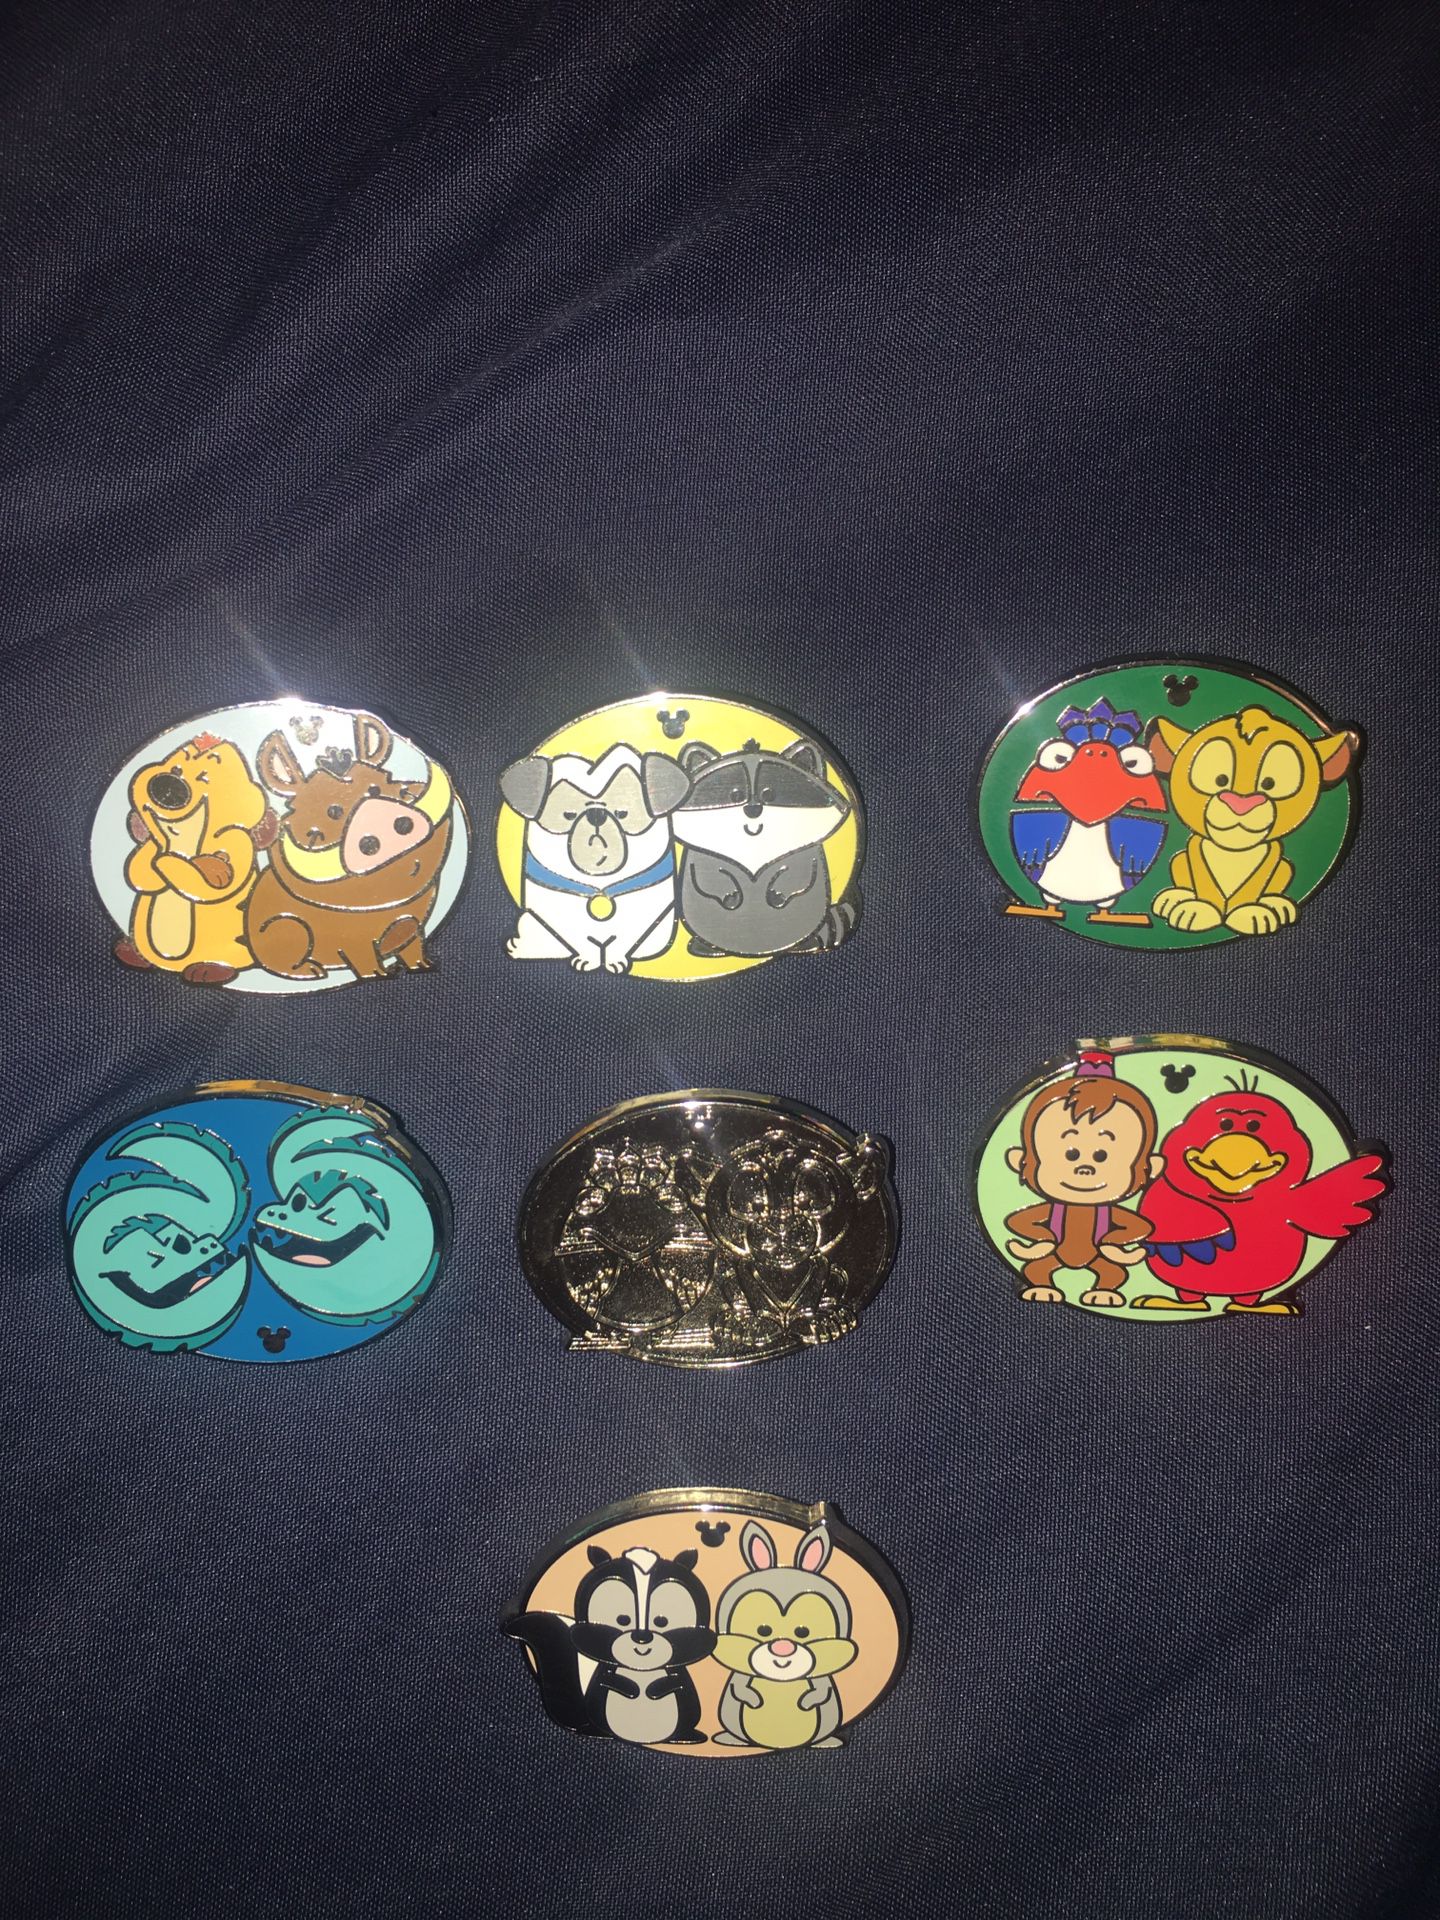 AUTHENTIC Disney Pins 2019 Hidden Mickey Complete Set of 7